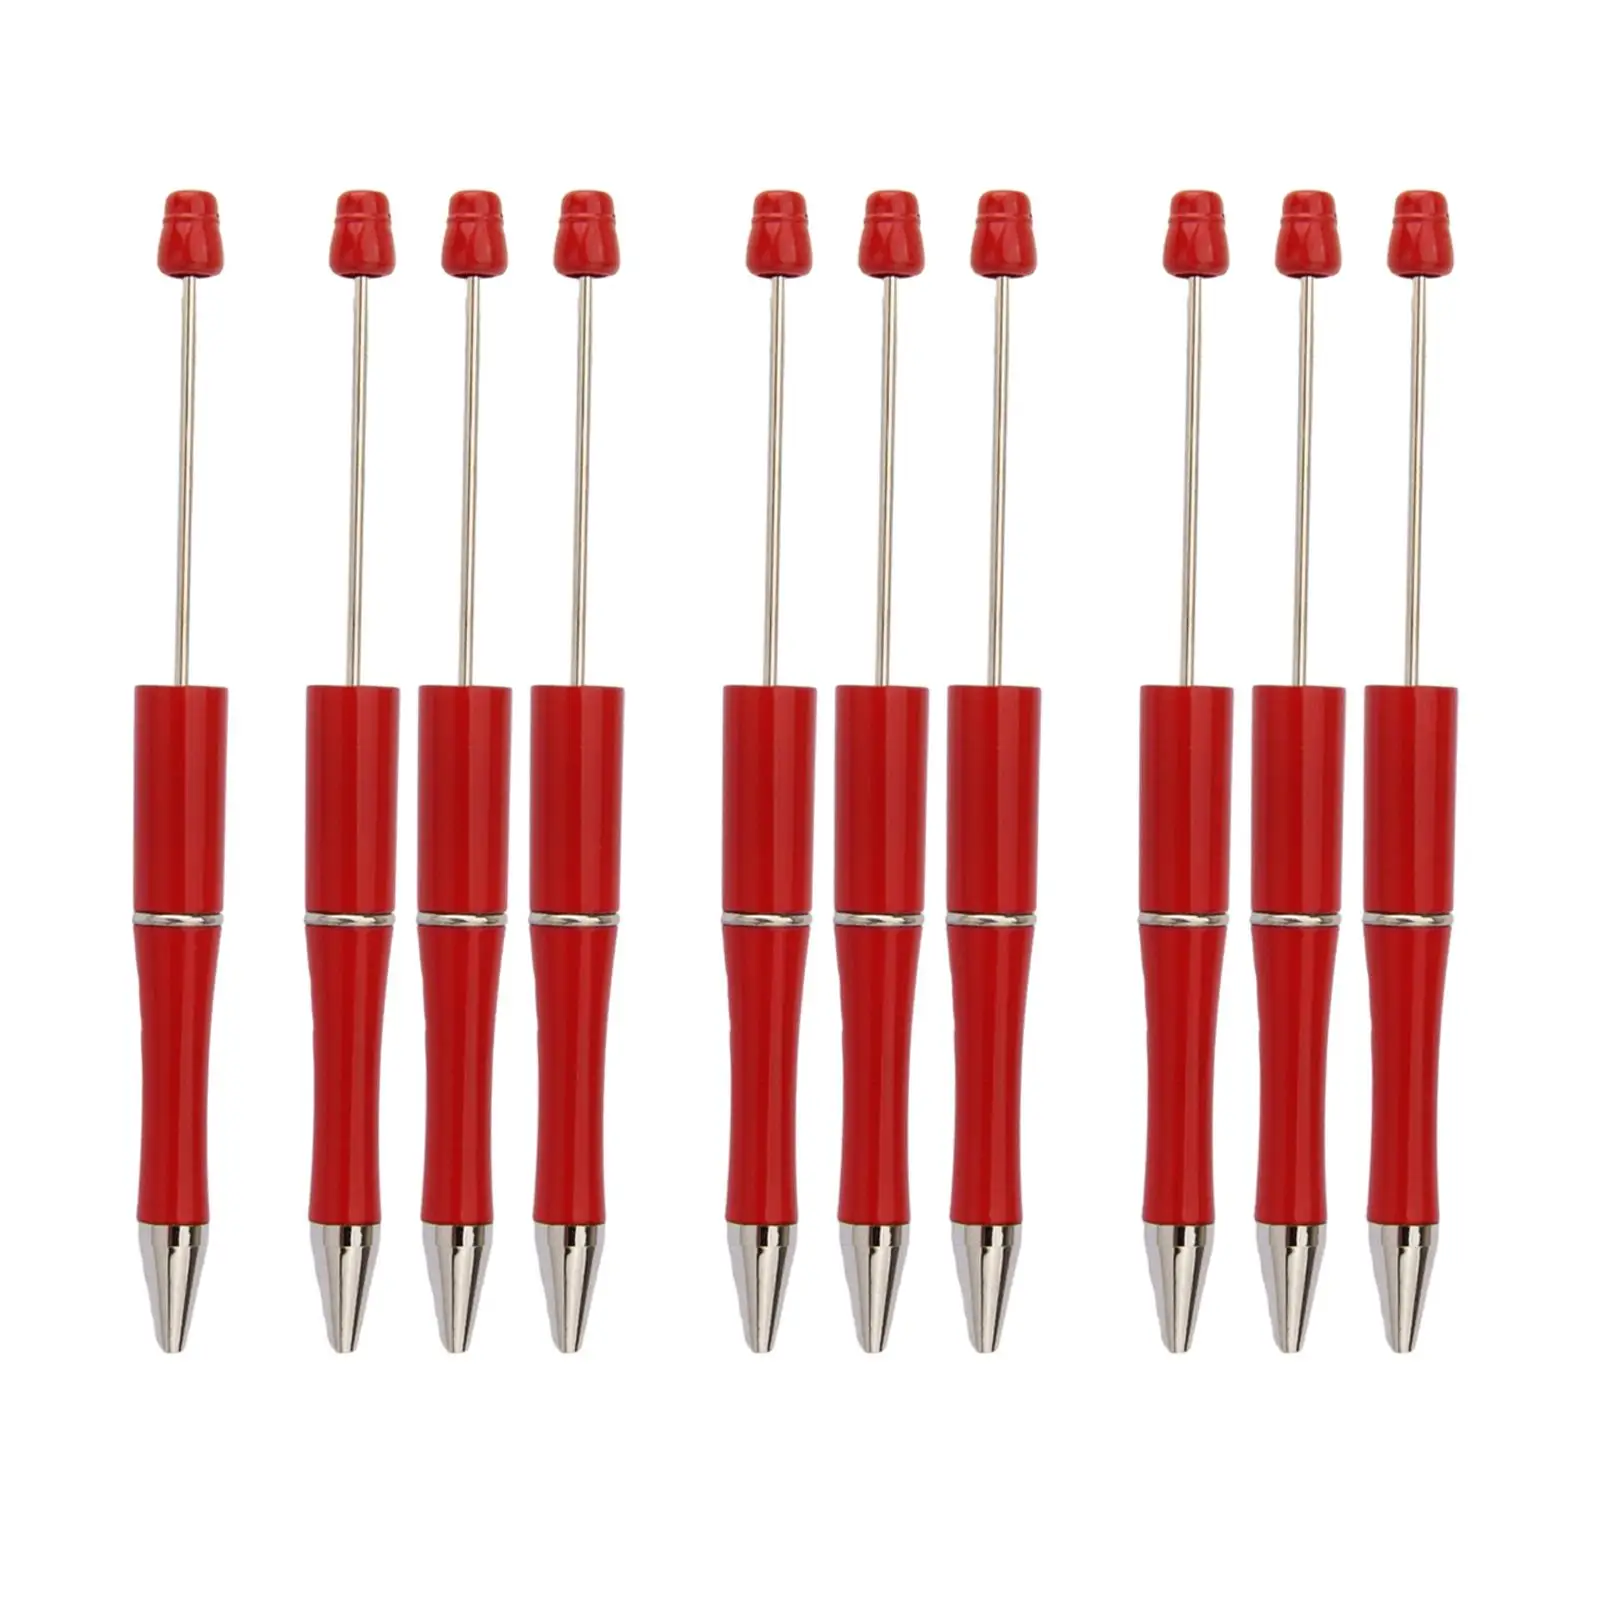 10 Pieces Beaded Pen DIY Crafting Pens for DIY Pen Kits Gift Supplies School